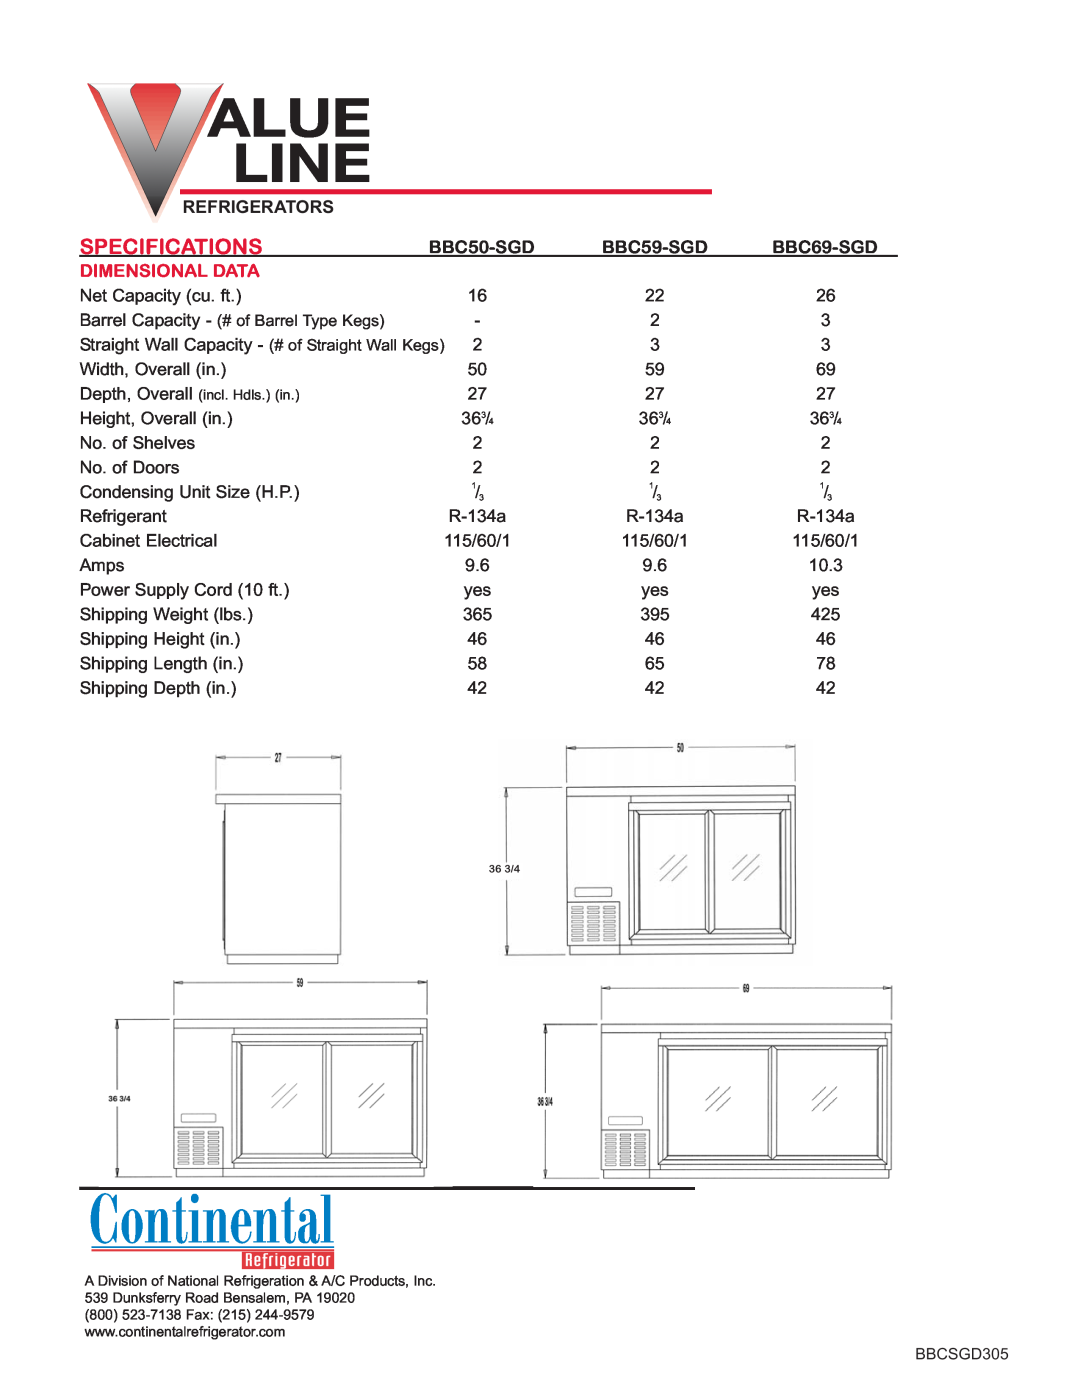 Continental Refrigerator R-134A manual Specifications, Refrigerators, BBC50-SGD, BBC59-SGD, BBC69-SGD, Dimensional Data 